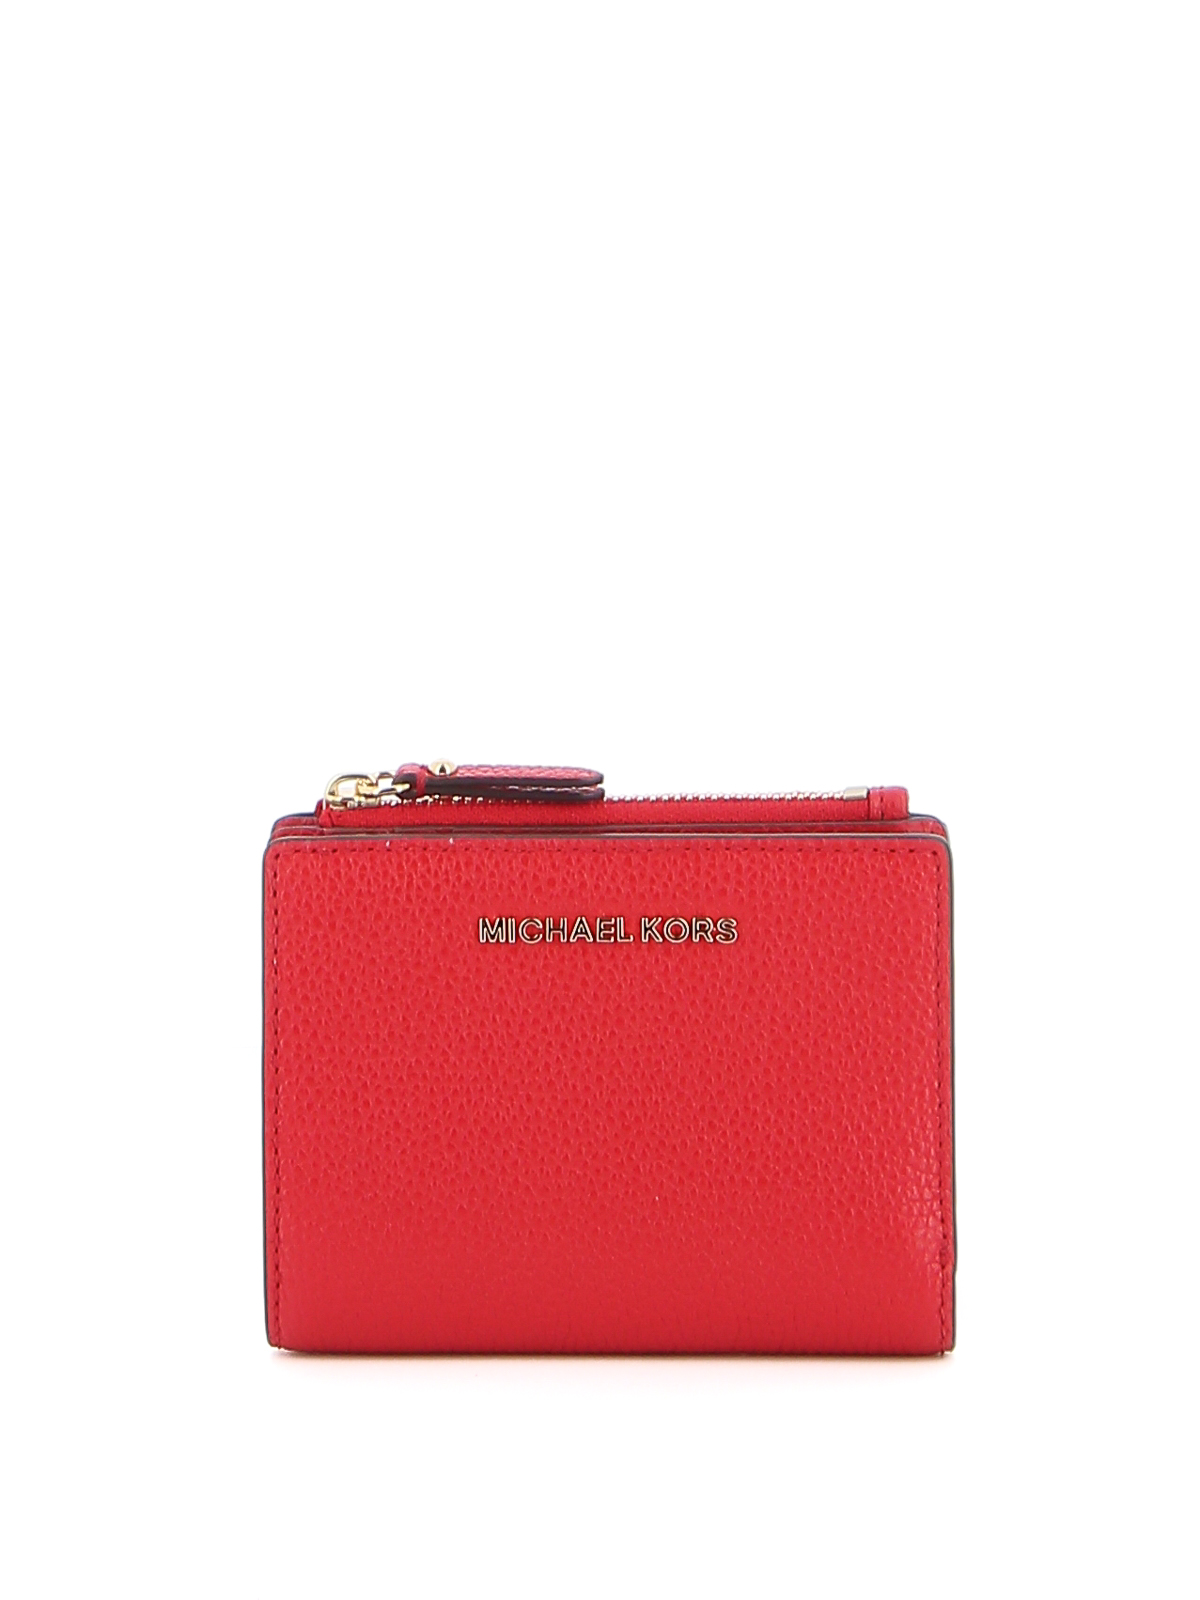 Michael Kors - Jet Set wallet - wallets 